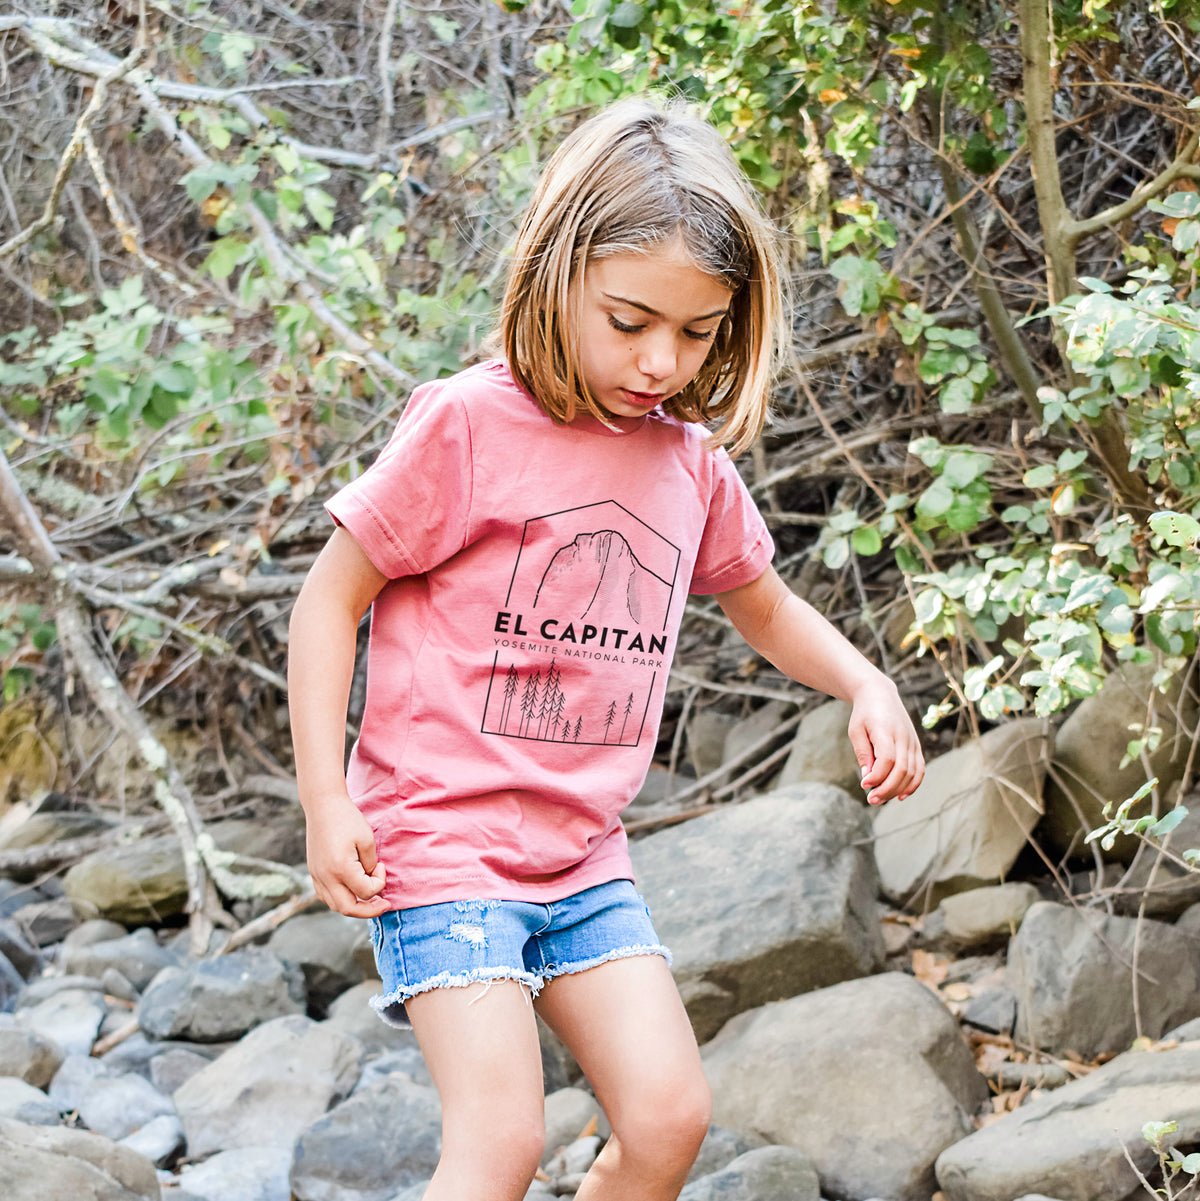 El Capitan - Yosemite National Park - Kids Shirt